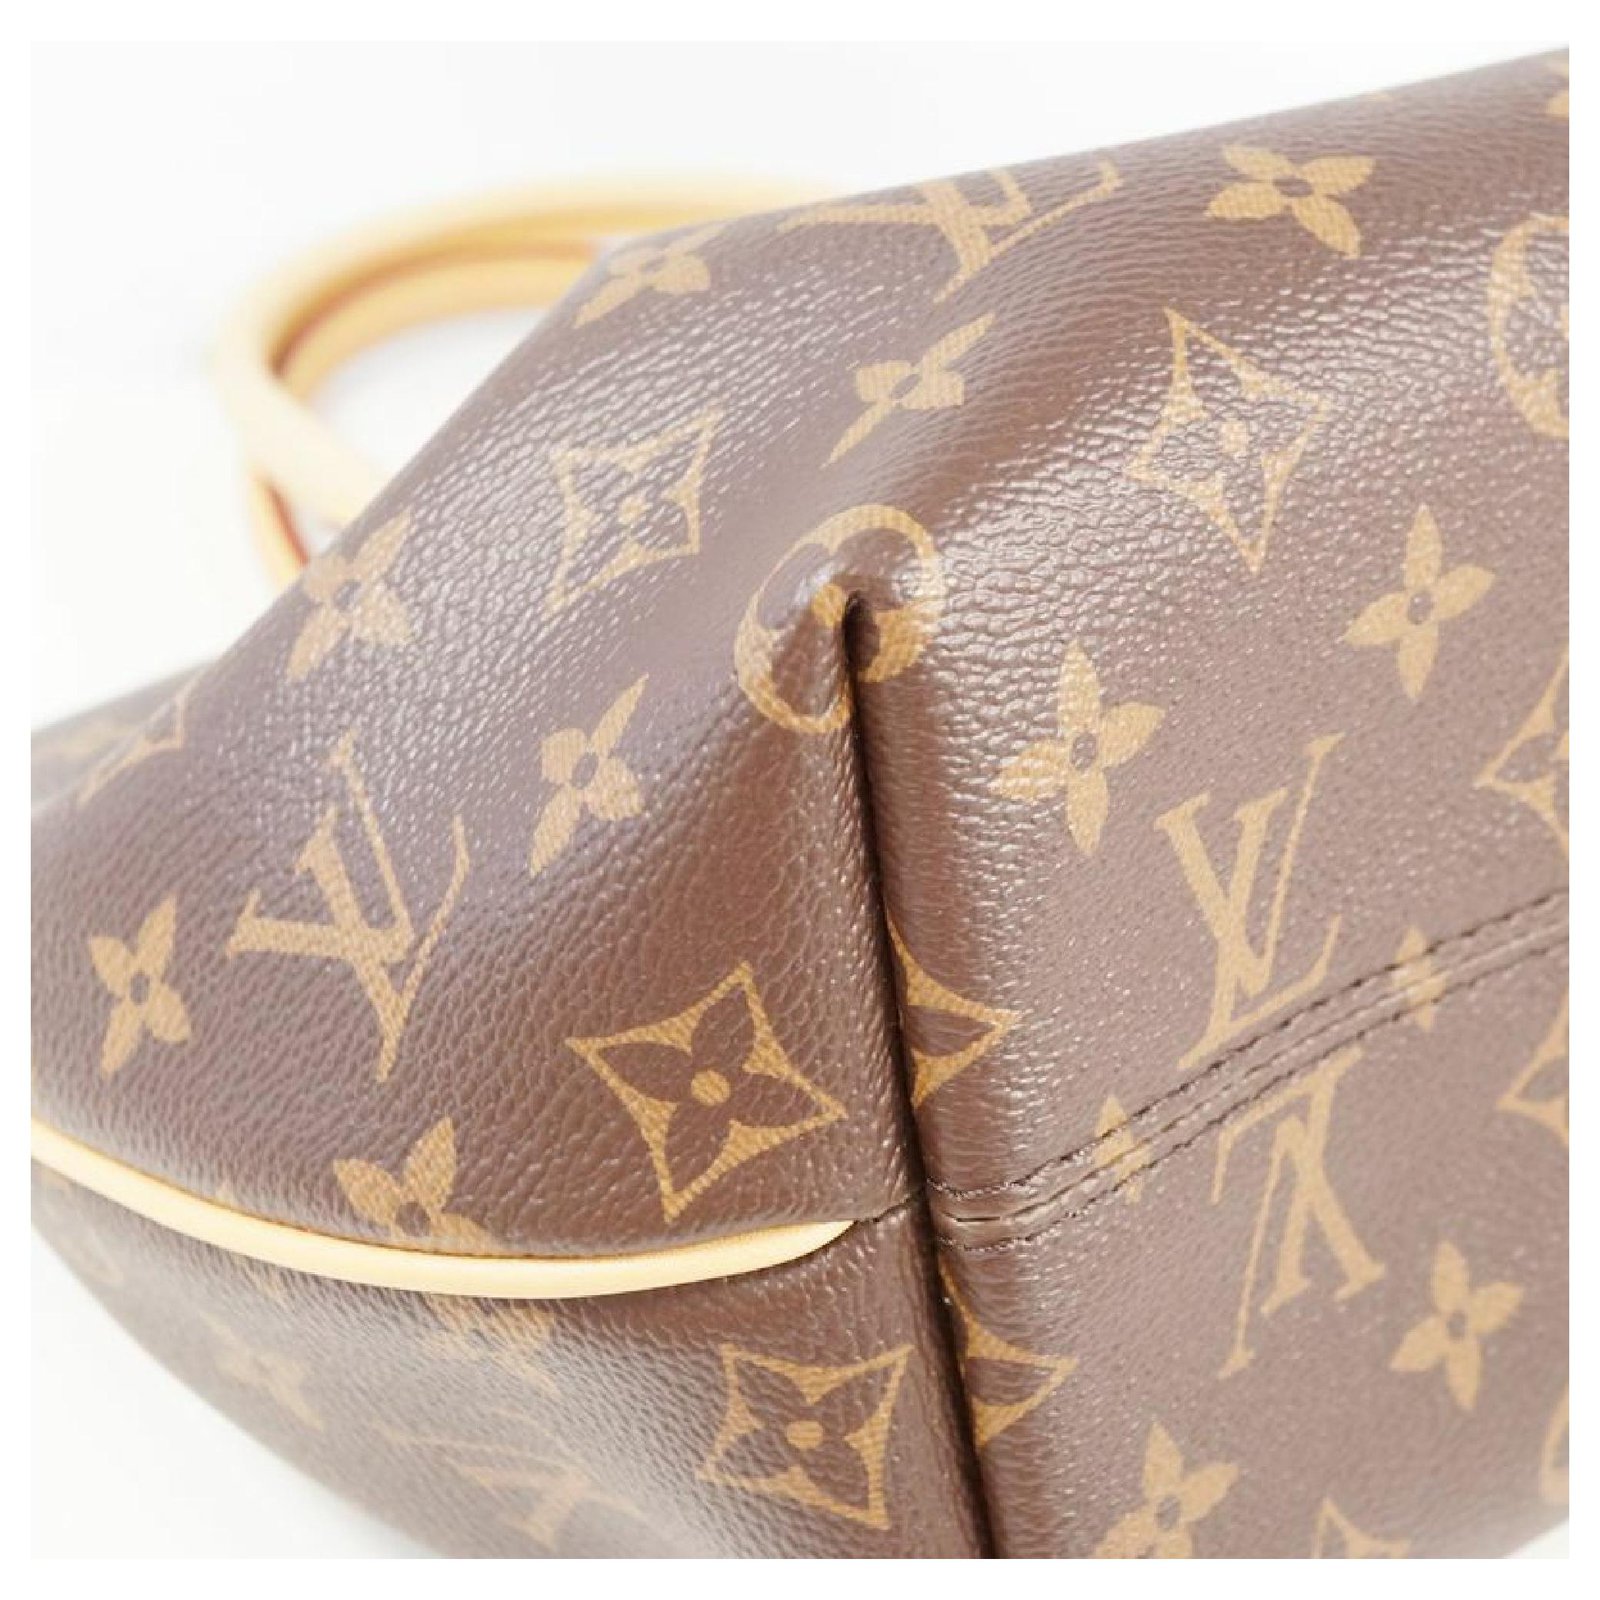 NEW! Authentic Louis Vuitton Monogram Turenne PM Tote Handbag: M48813